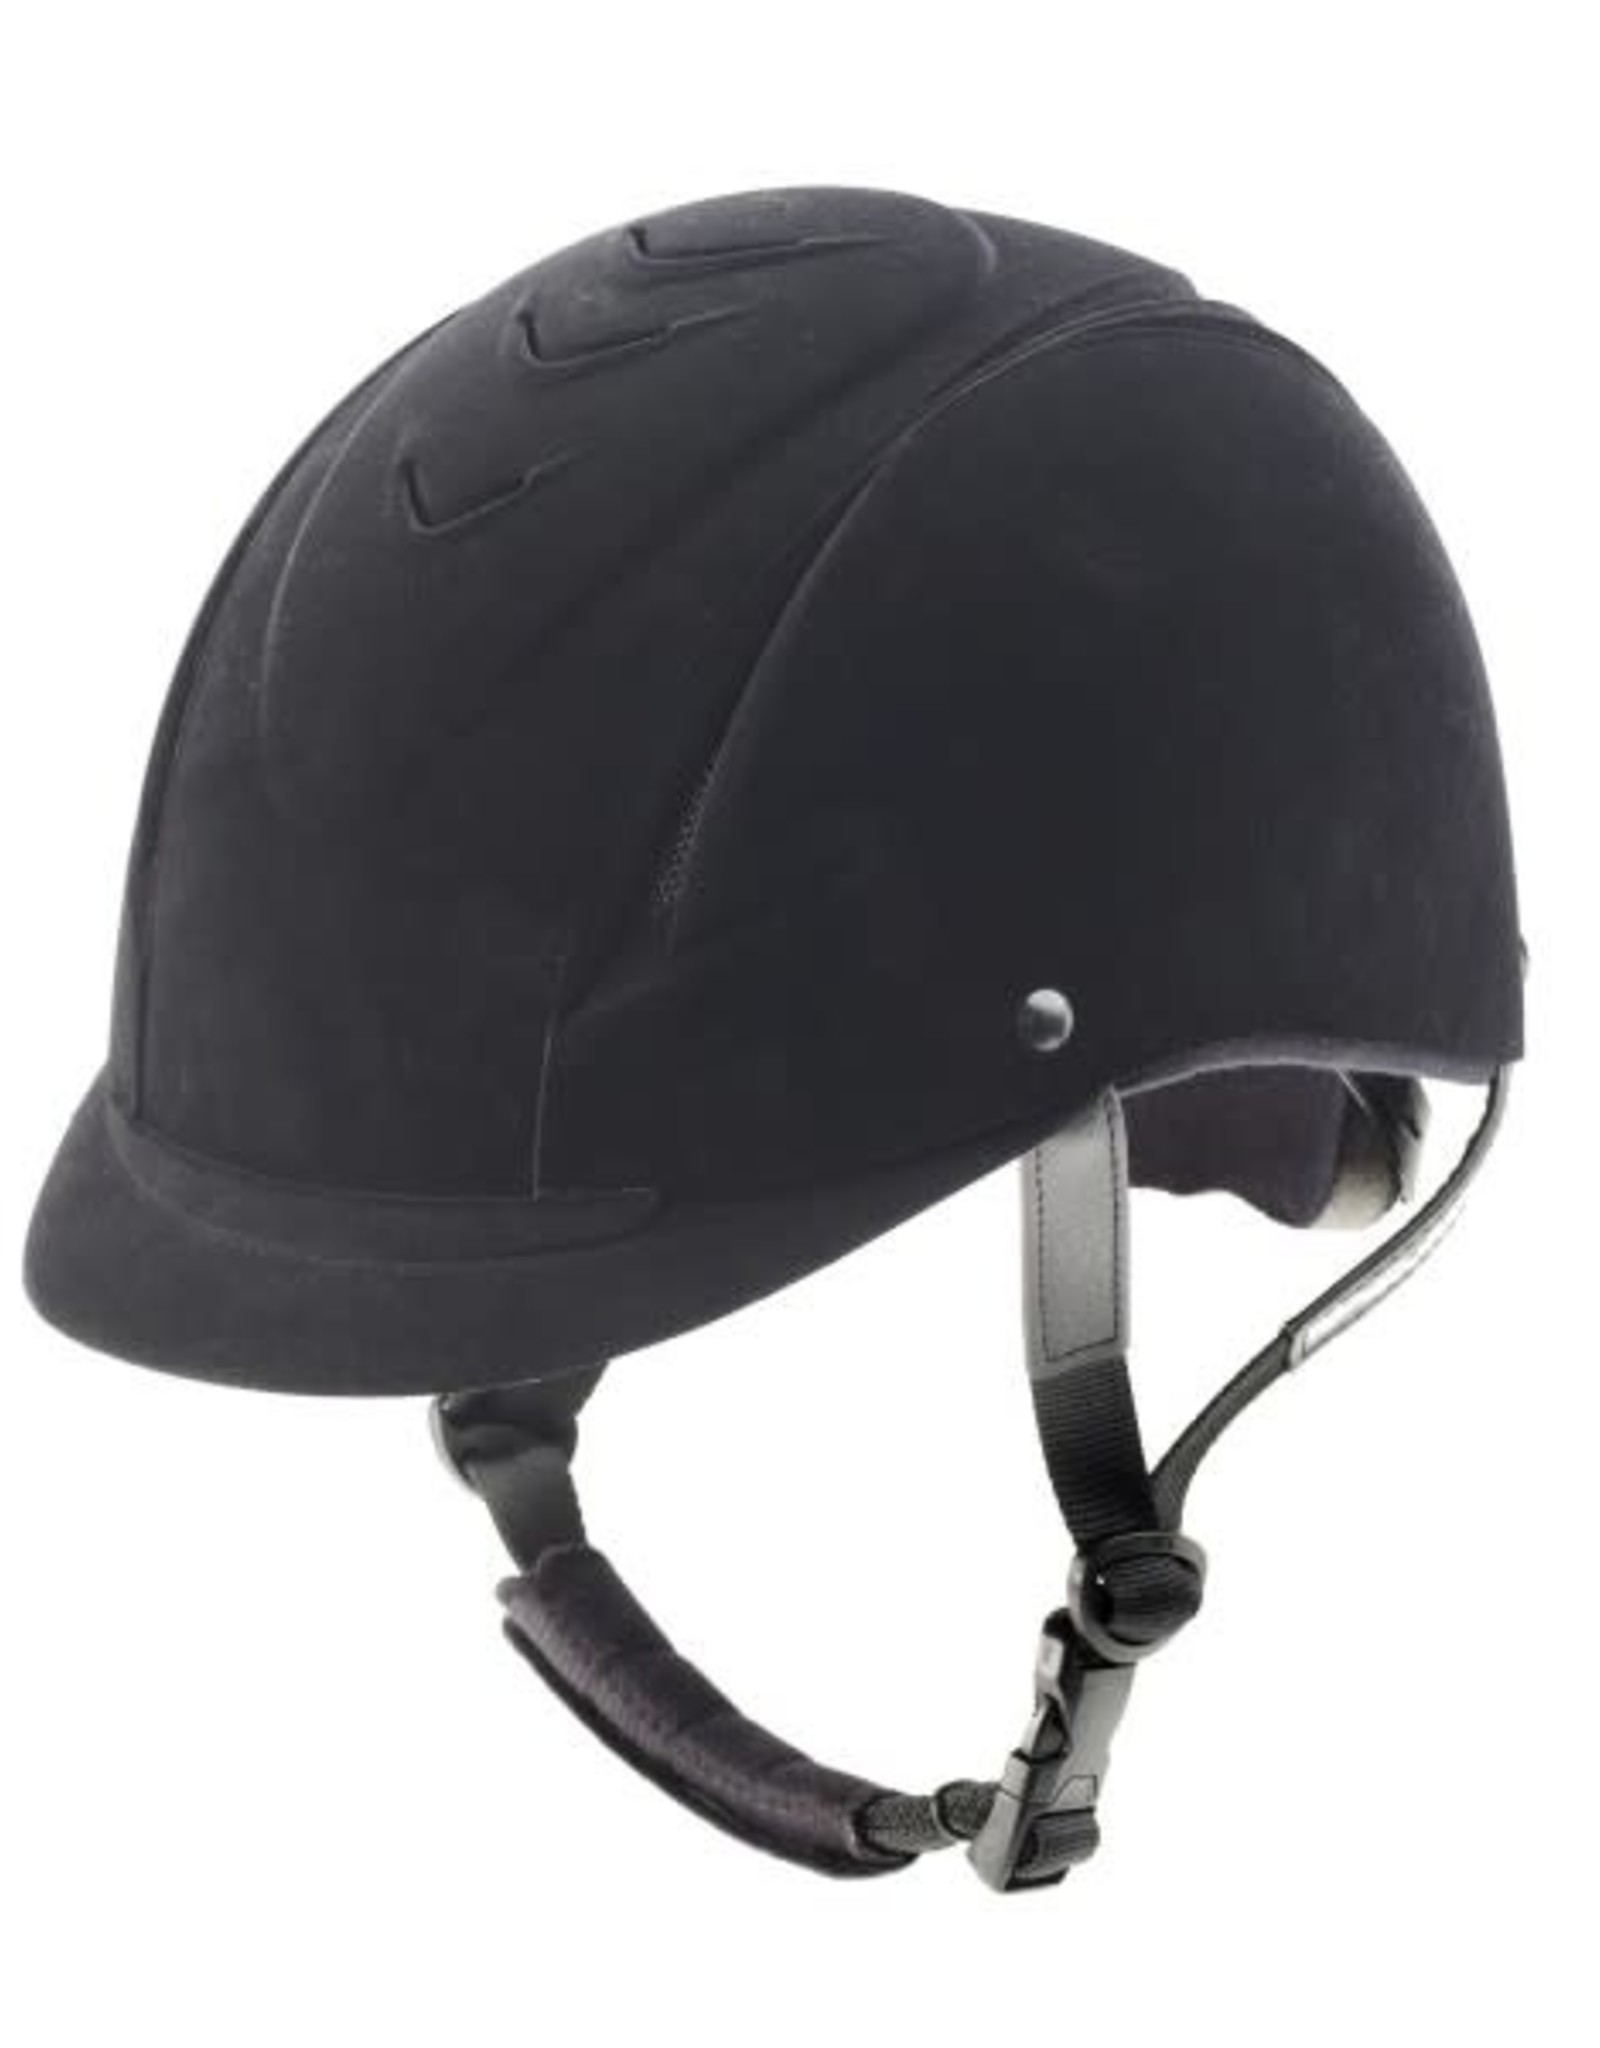 Ovation Ovation Competitor Helmet